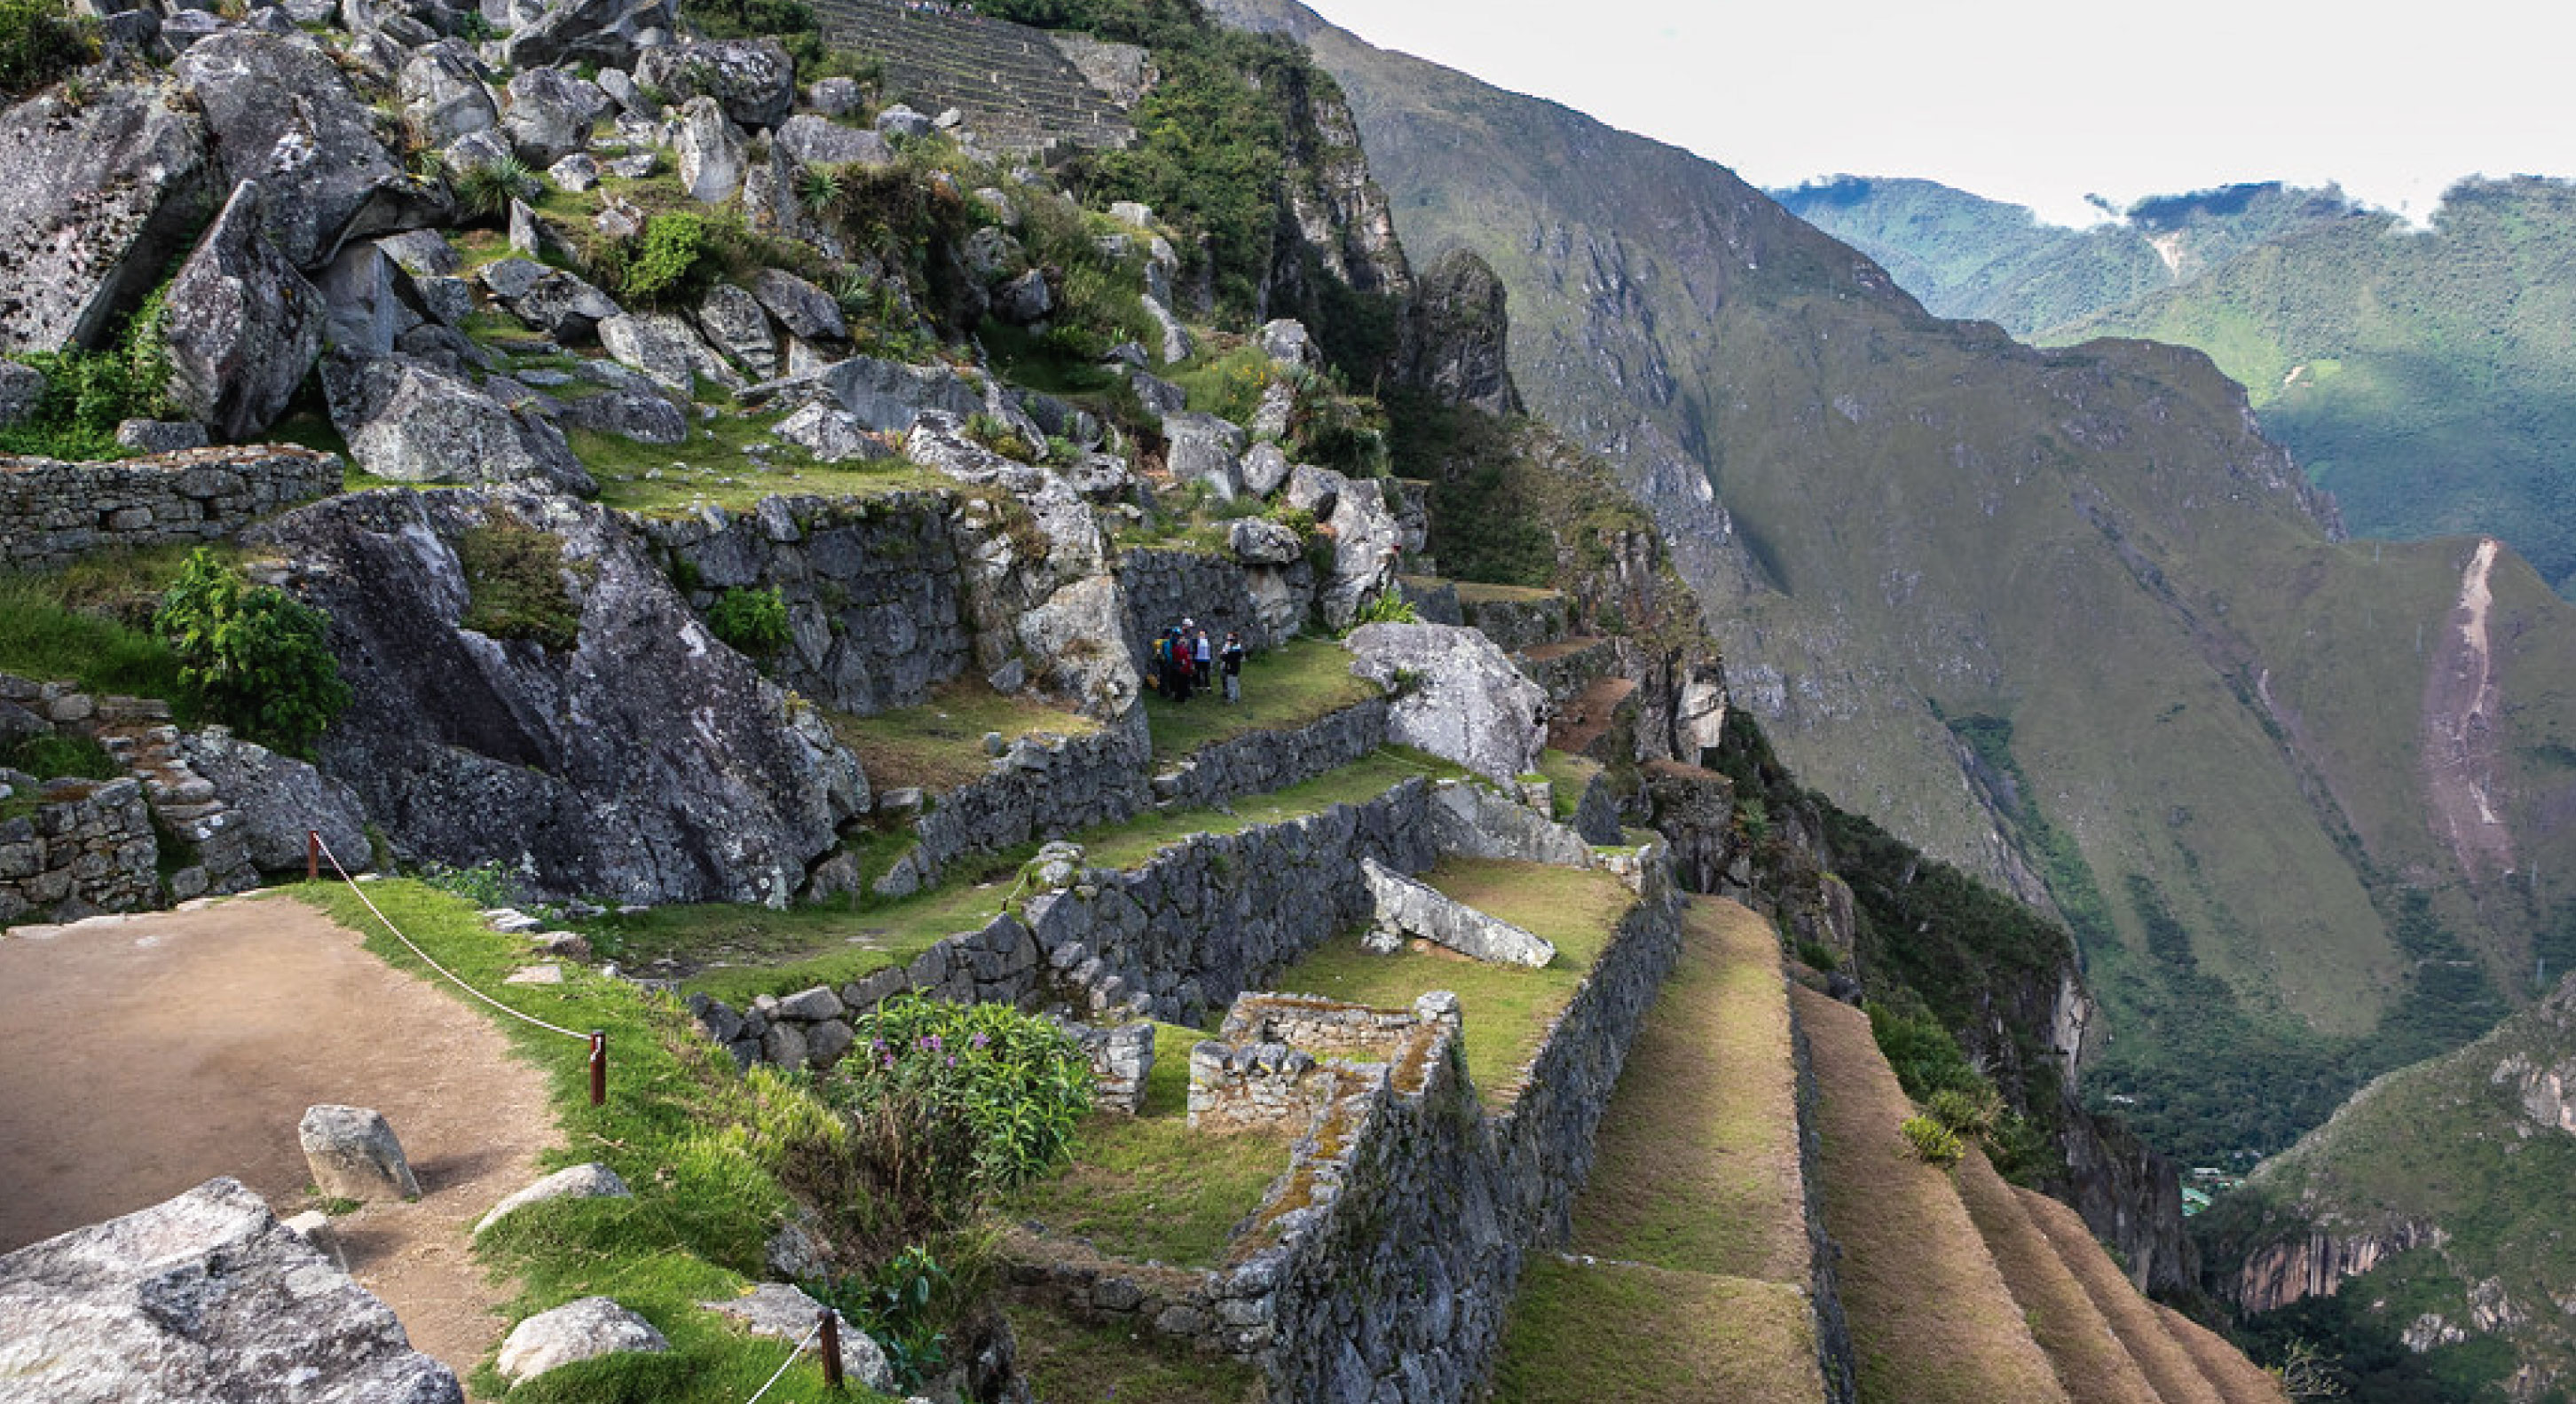 The Urubamba River of Machu Picchu